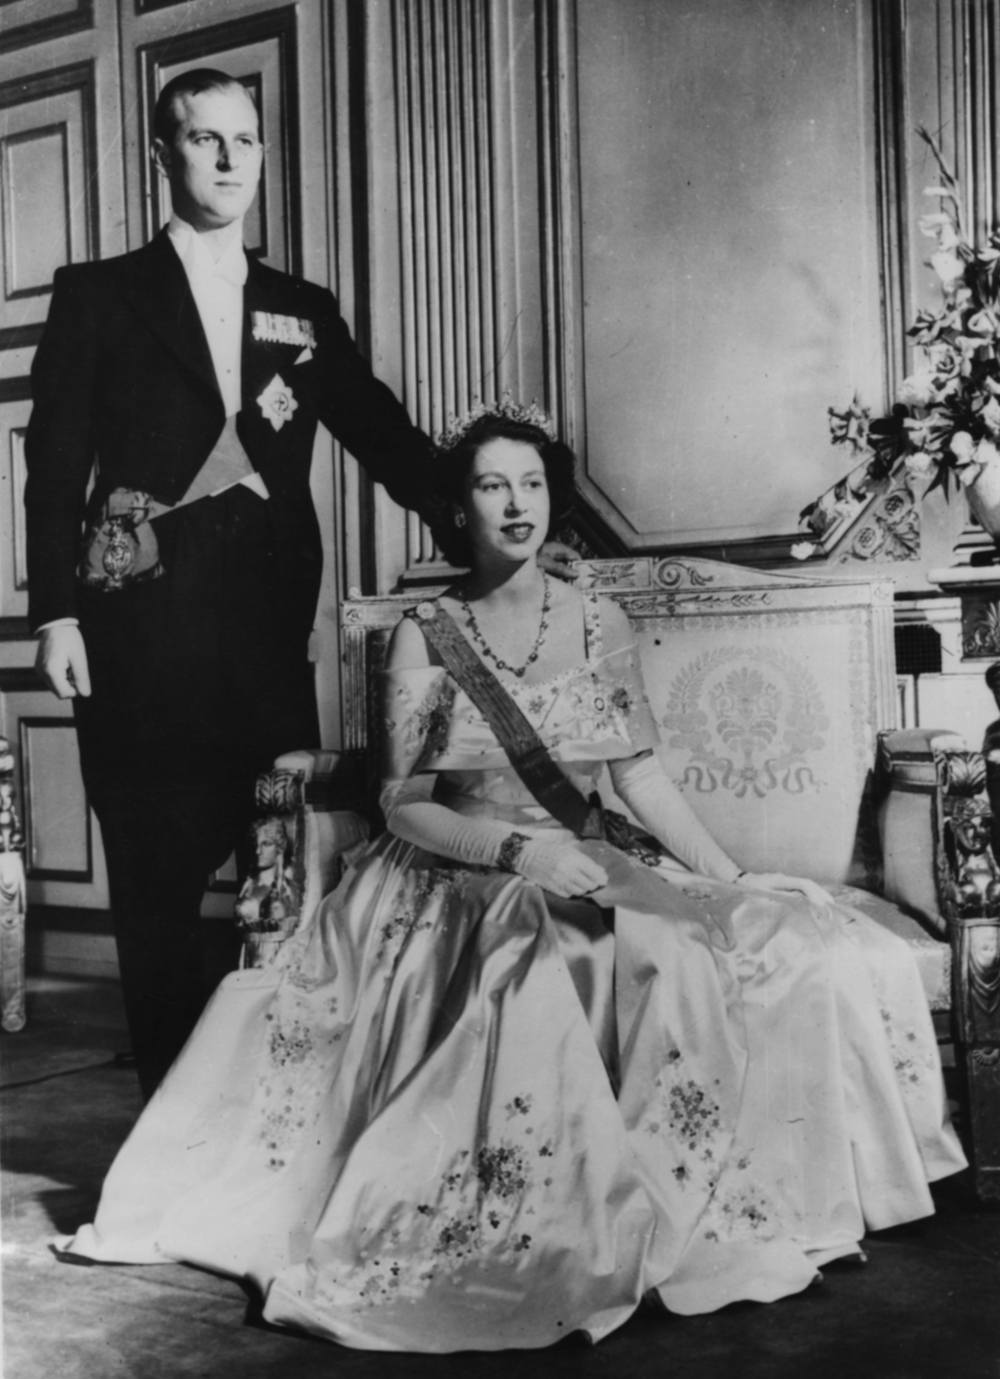 Queen Elizabeth II and Prince Philip, the Duke of Edinburgh, circa 1952